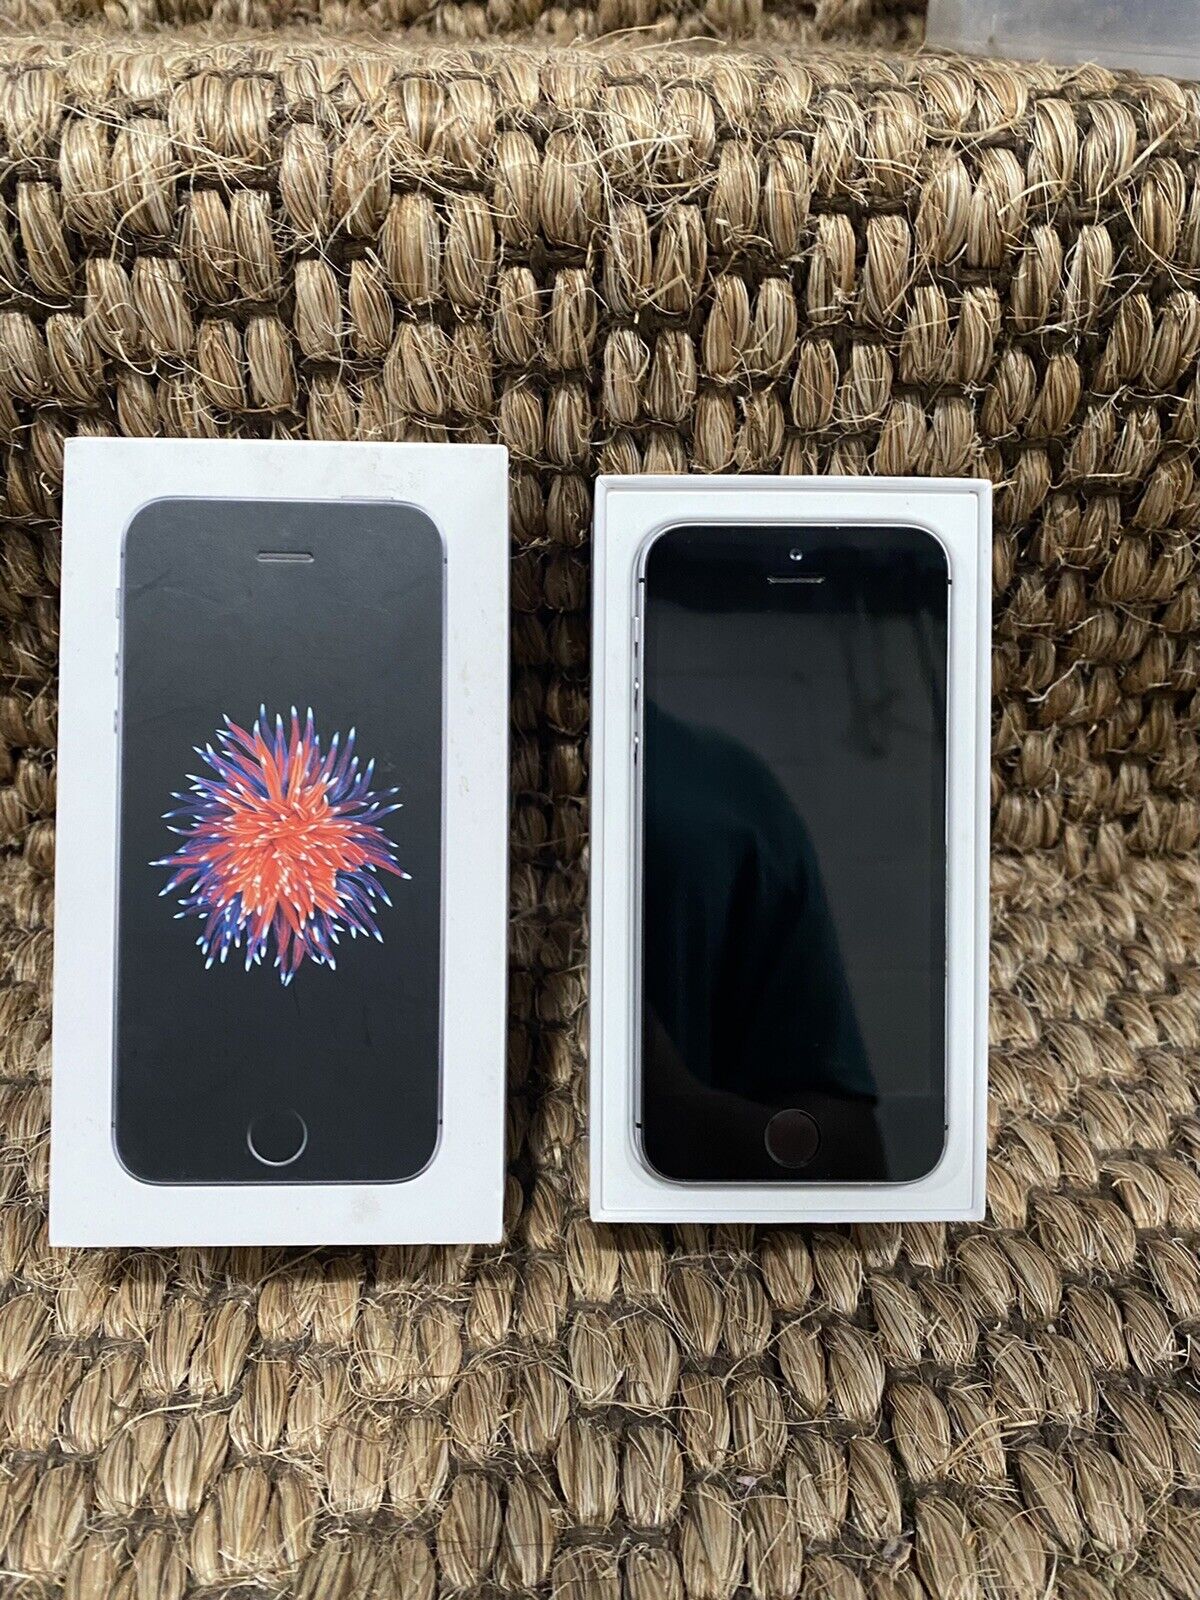 Apple iPhone SE - 16GB - Space Gray (Unlocked) A1662 (CDMA + GSM)1st Generation